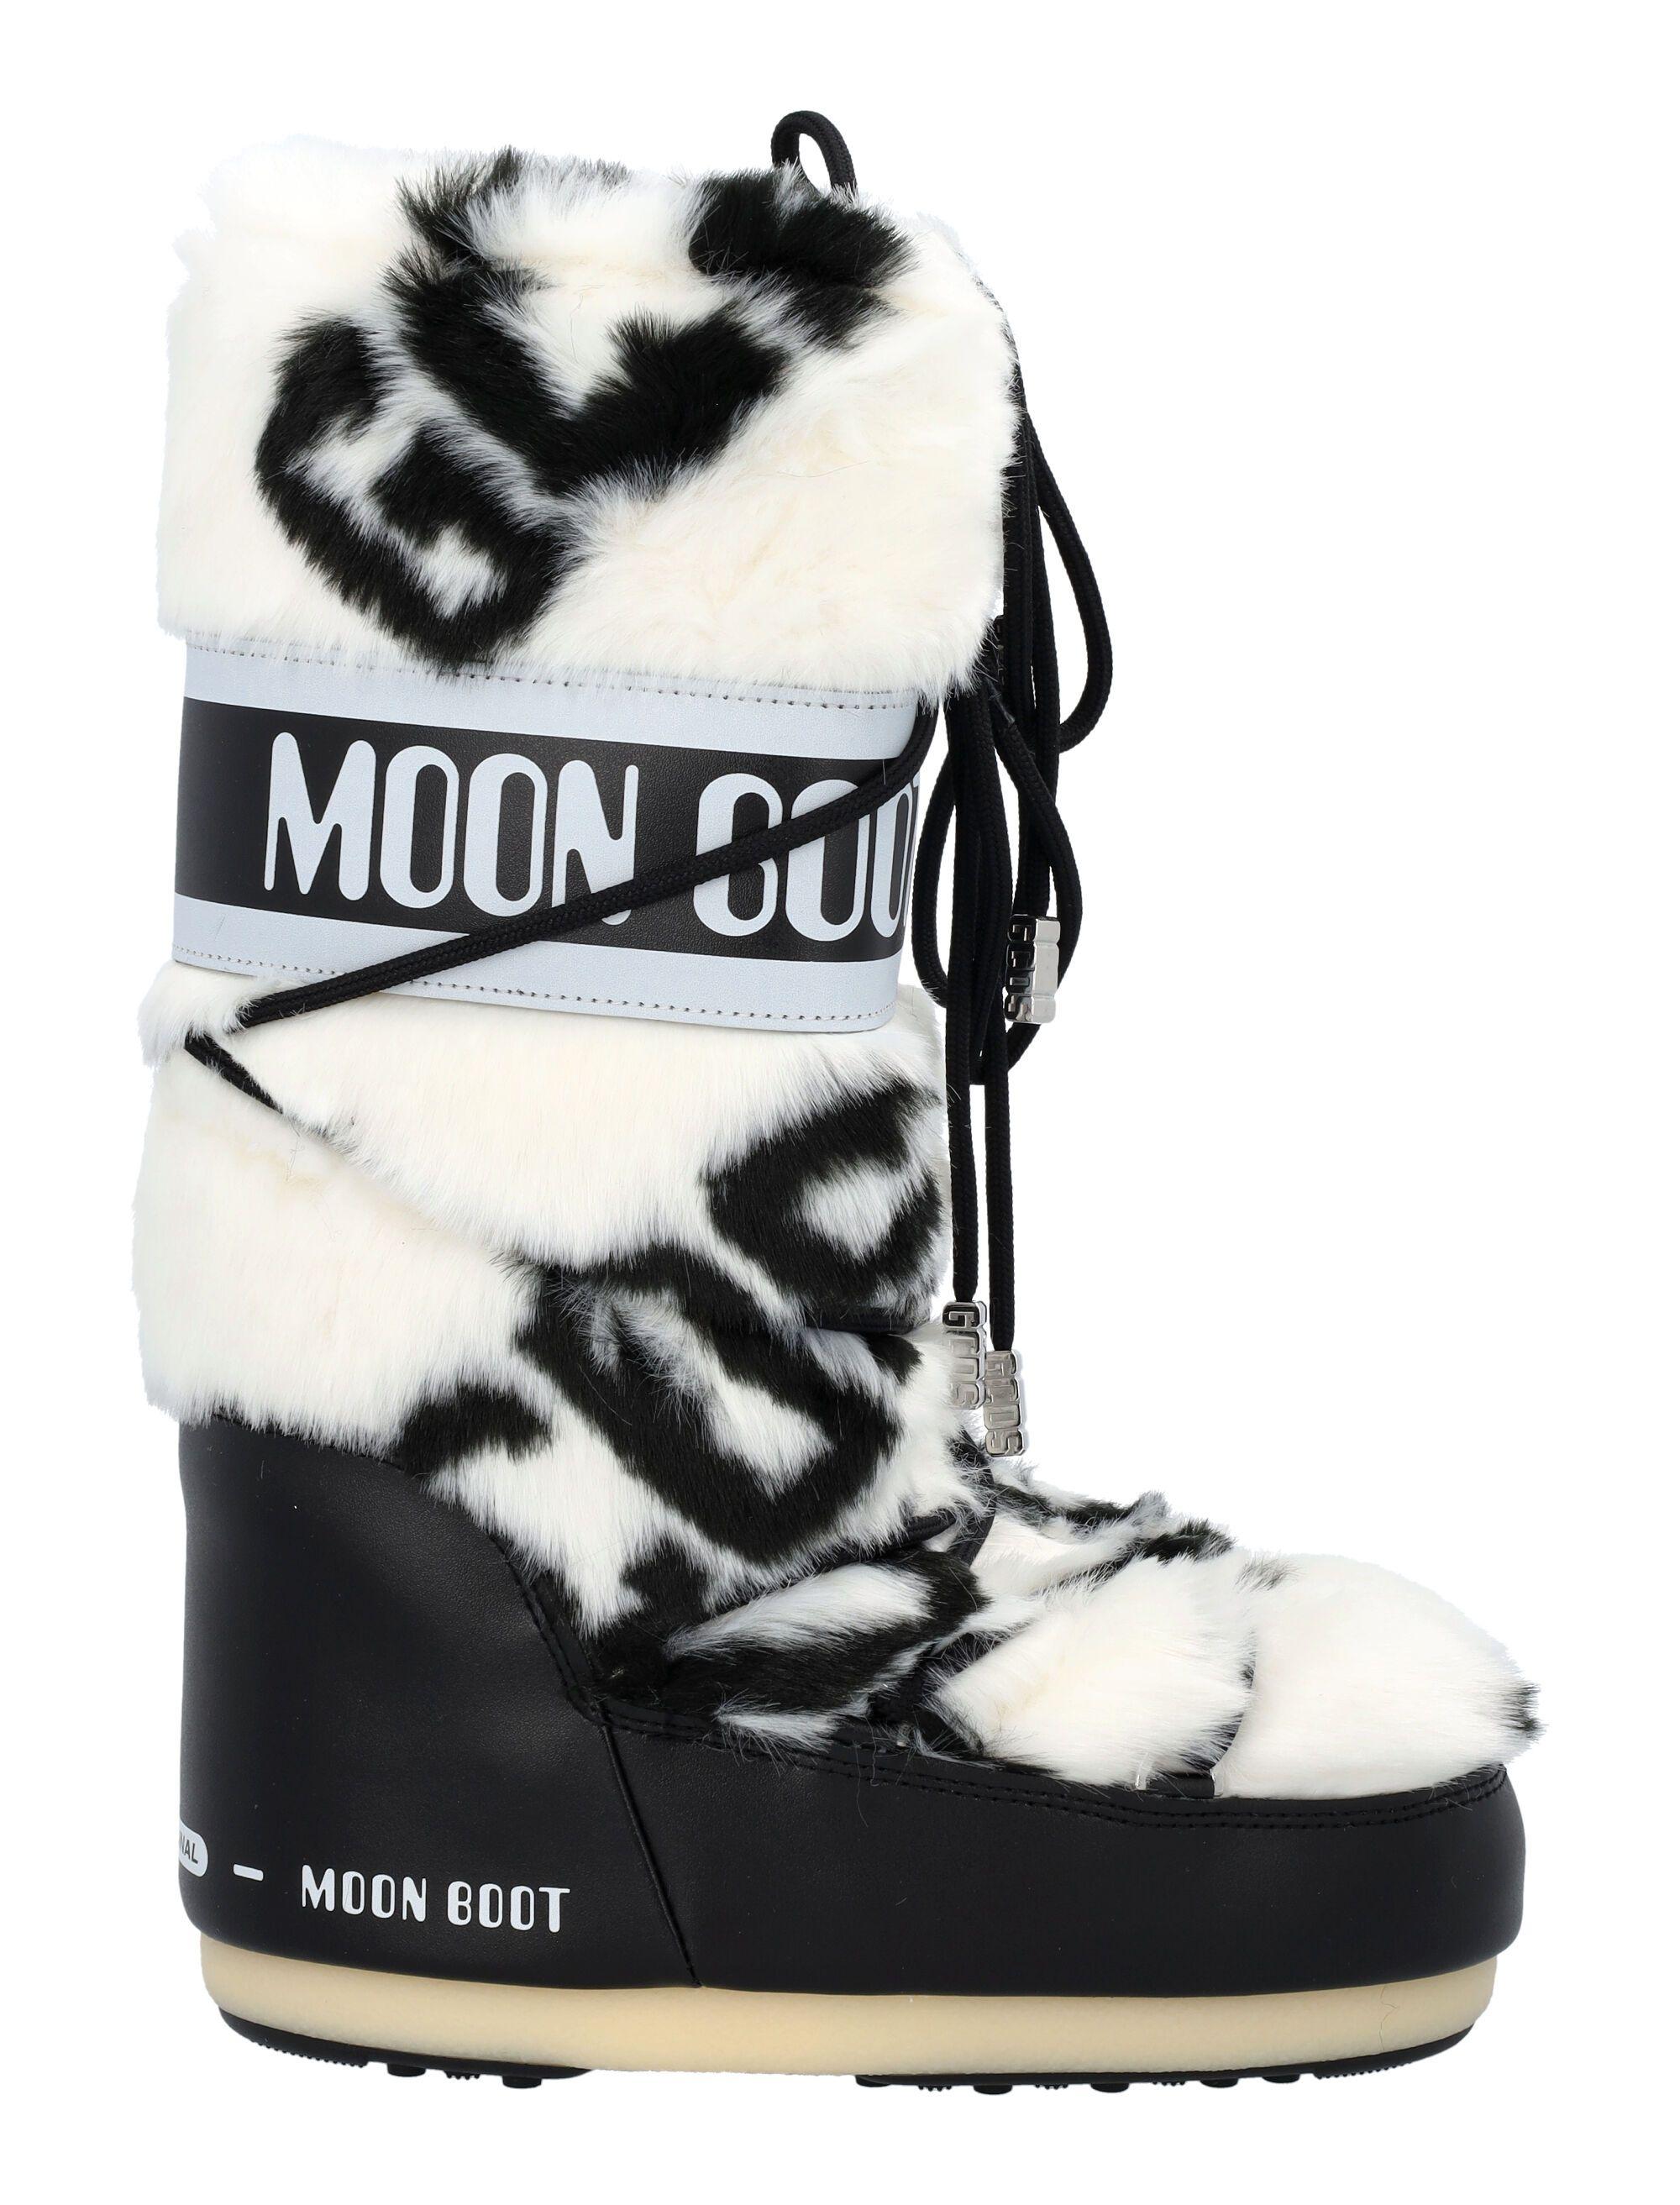 Roest Gelovige een vuurtje stoken Gcds Faux-fur Moon Boots in Black | Lyst